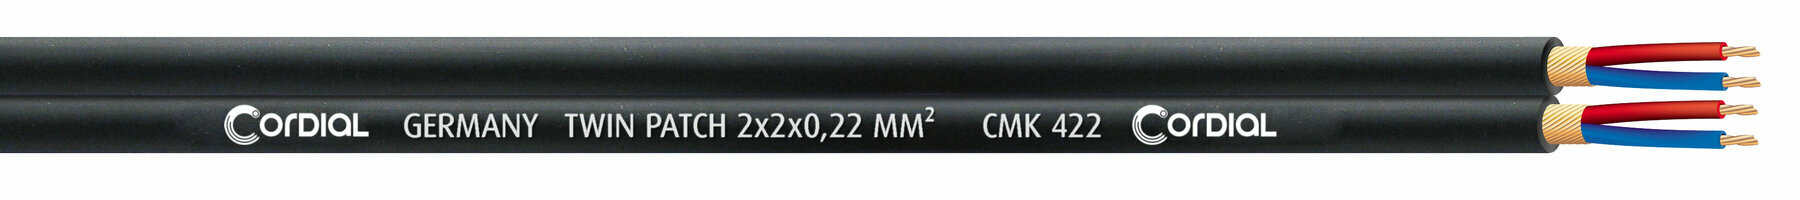 Cable de micrófono Cordial CMK 422 BK 100